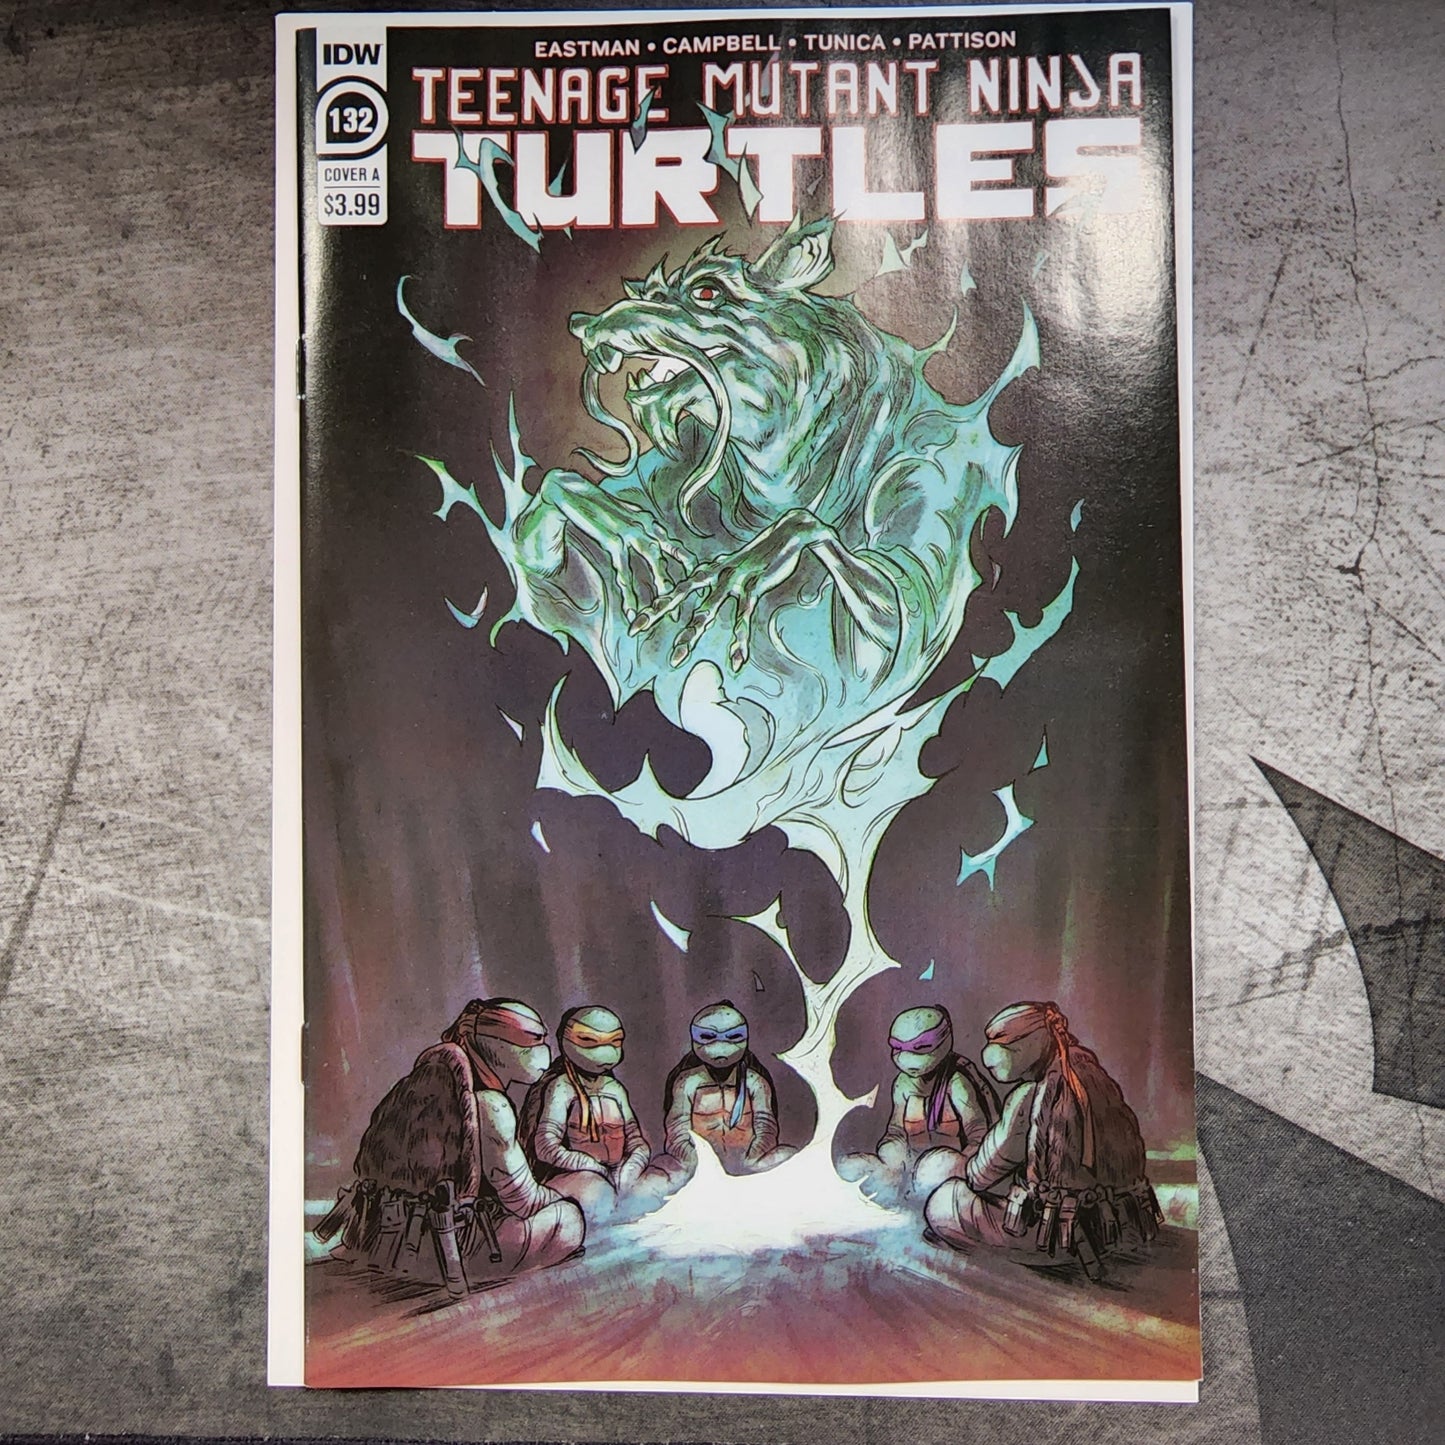 Teenage Mutant Ninja Turtles #132 TMNT Cover A Pablo Tunica NM IDW